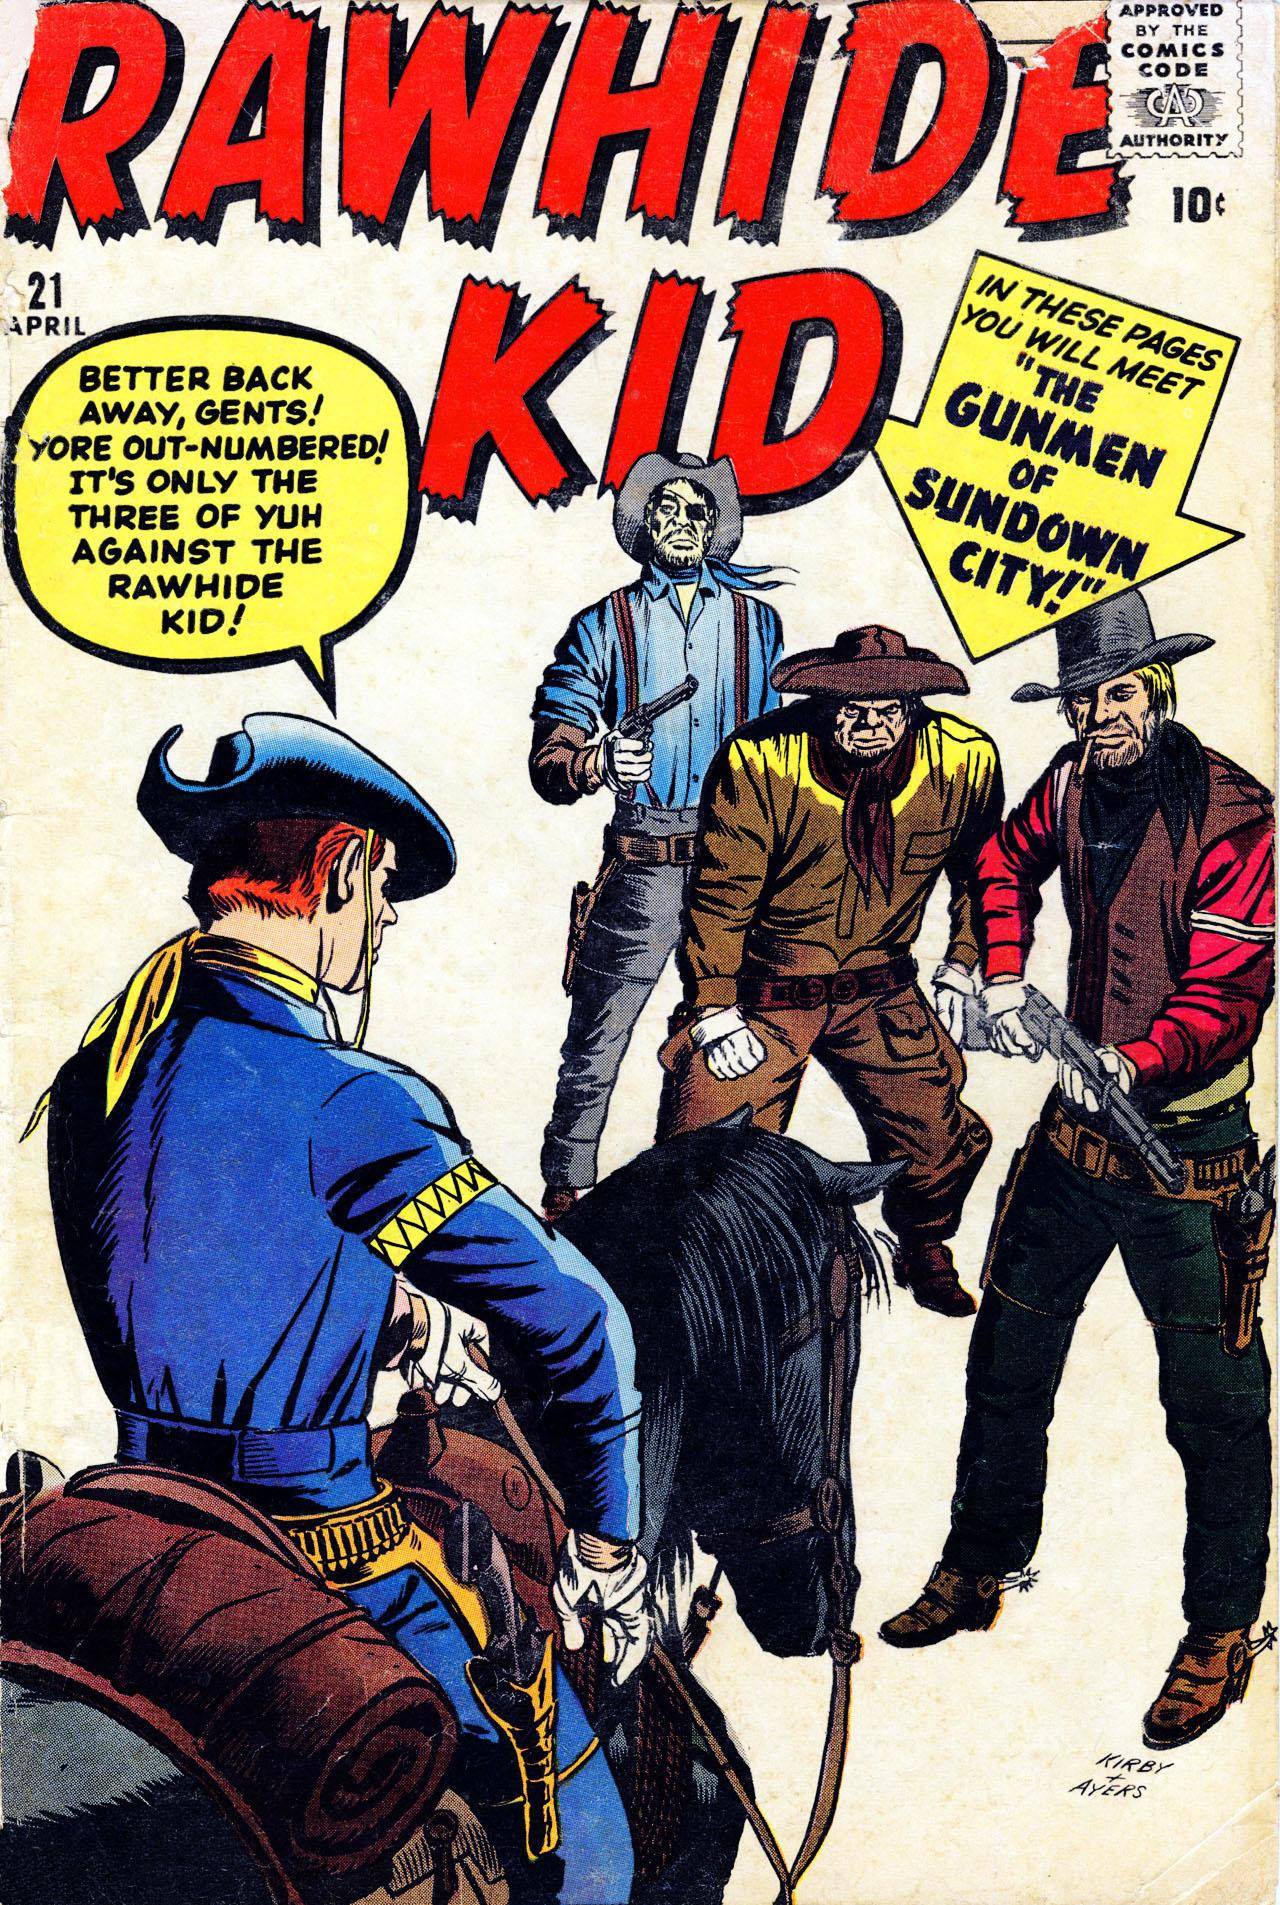 Rawhide Kid v1 021 1960 Gambit